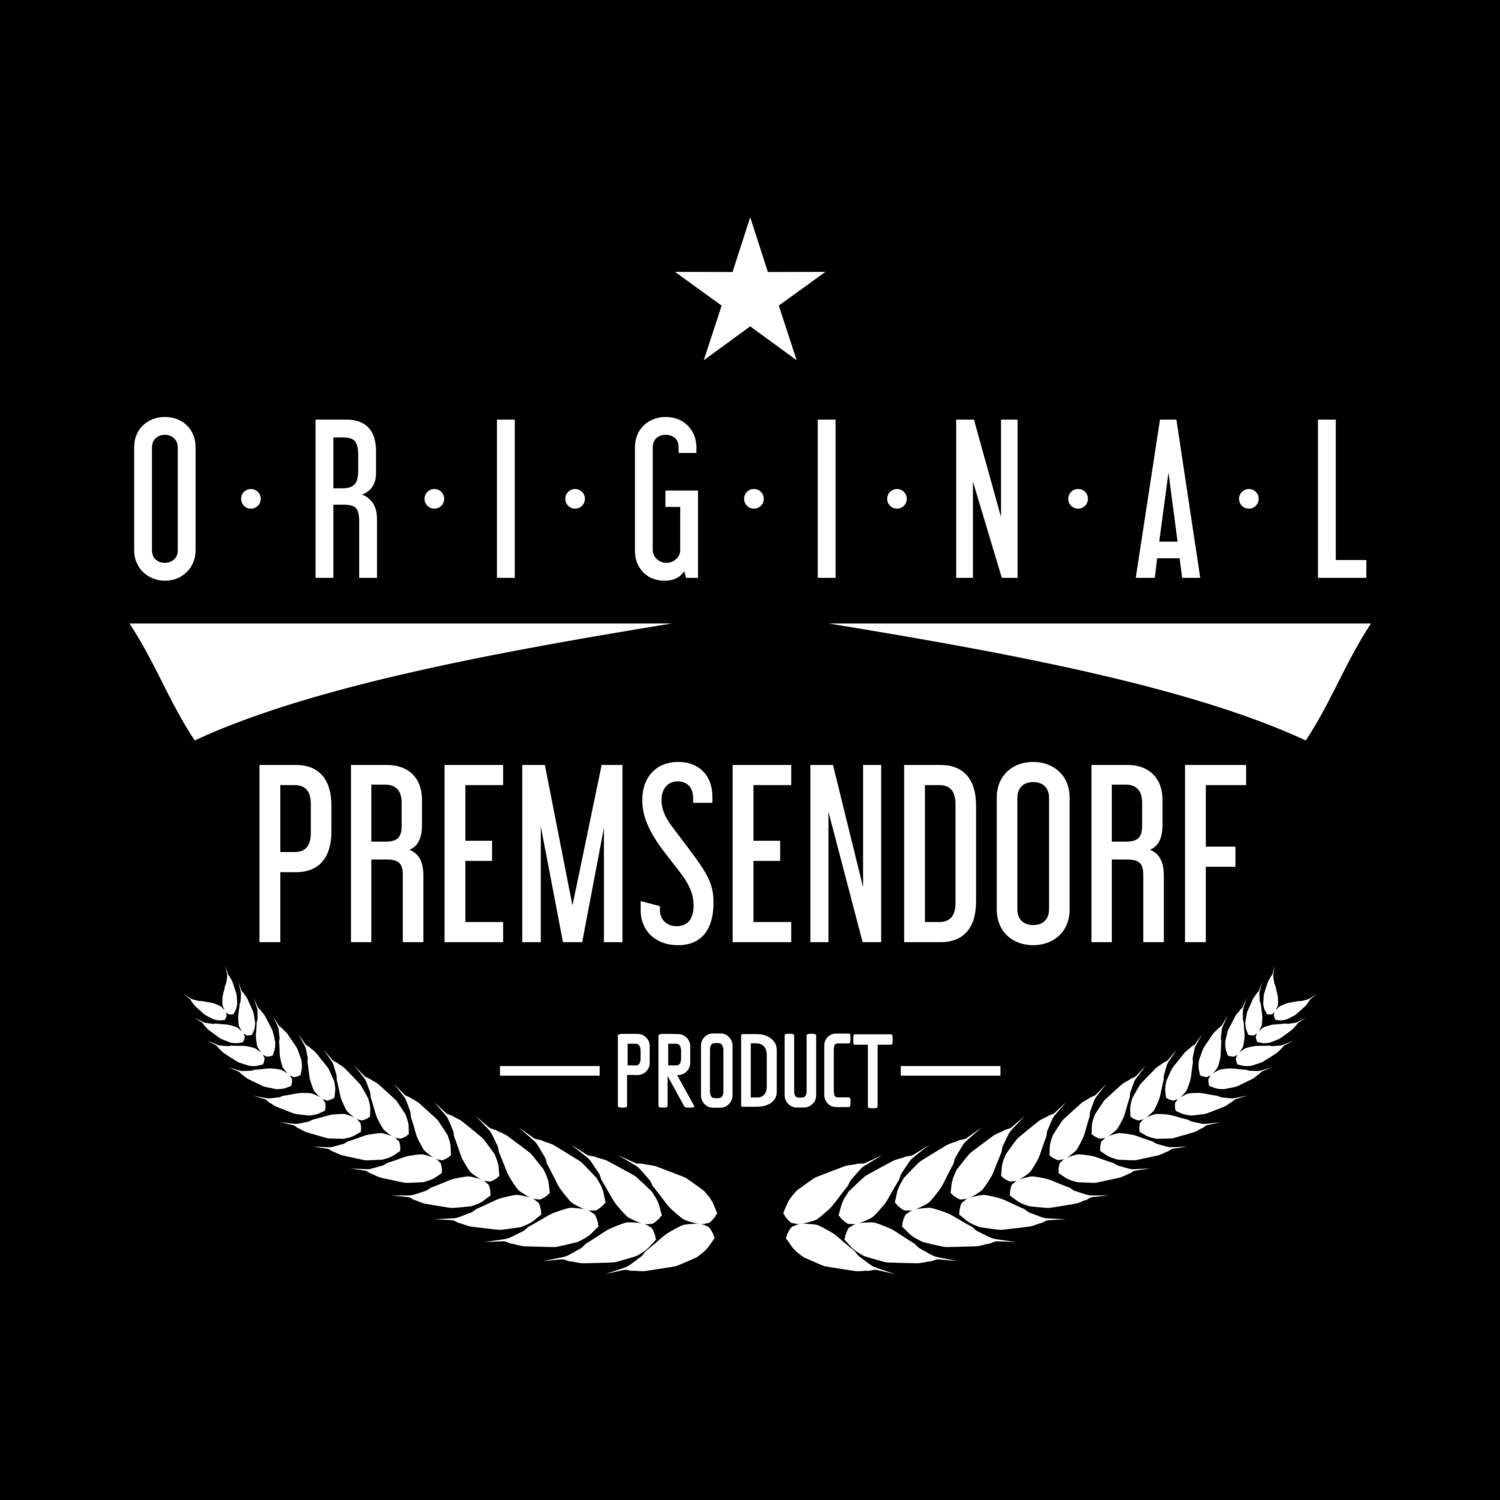 Premsendorf T-Shirt »Original Product«